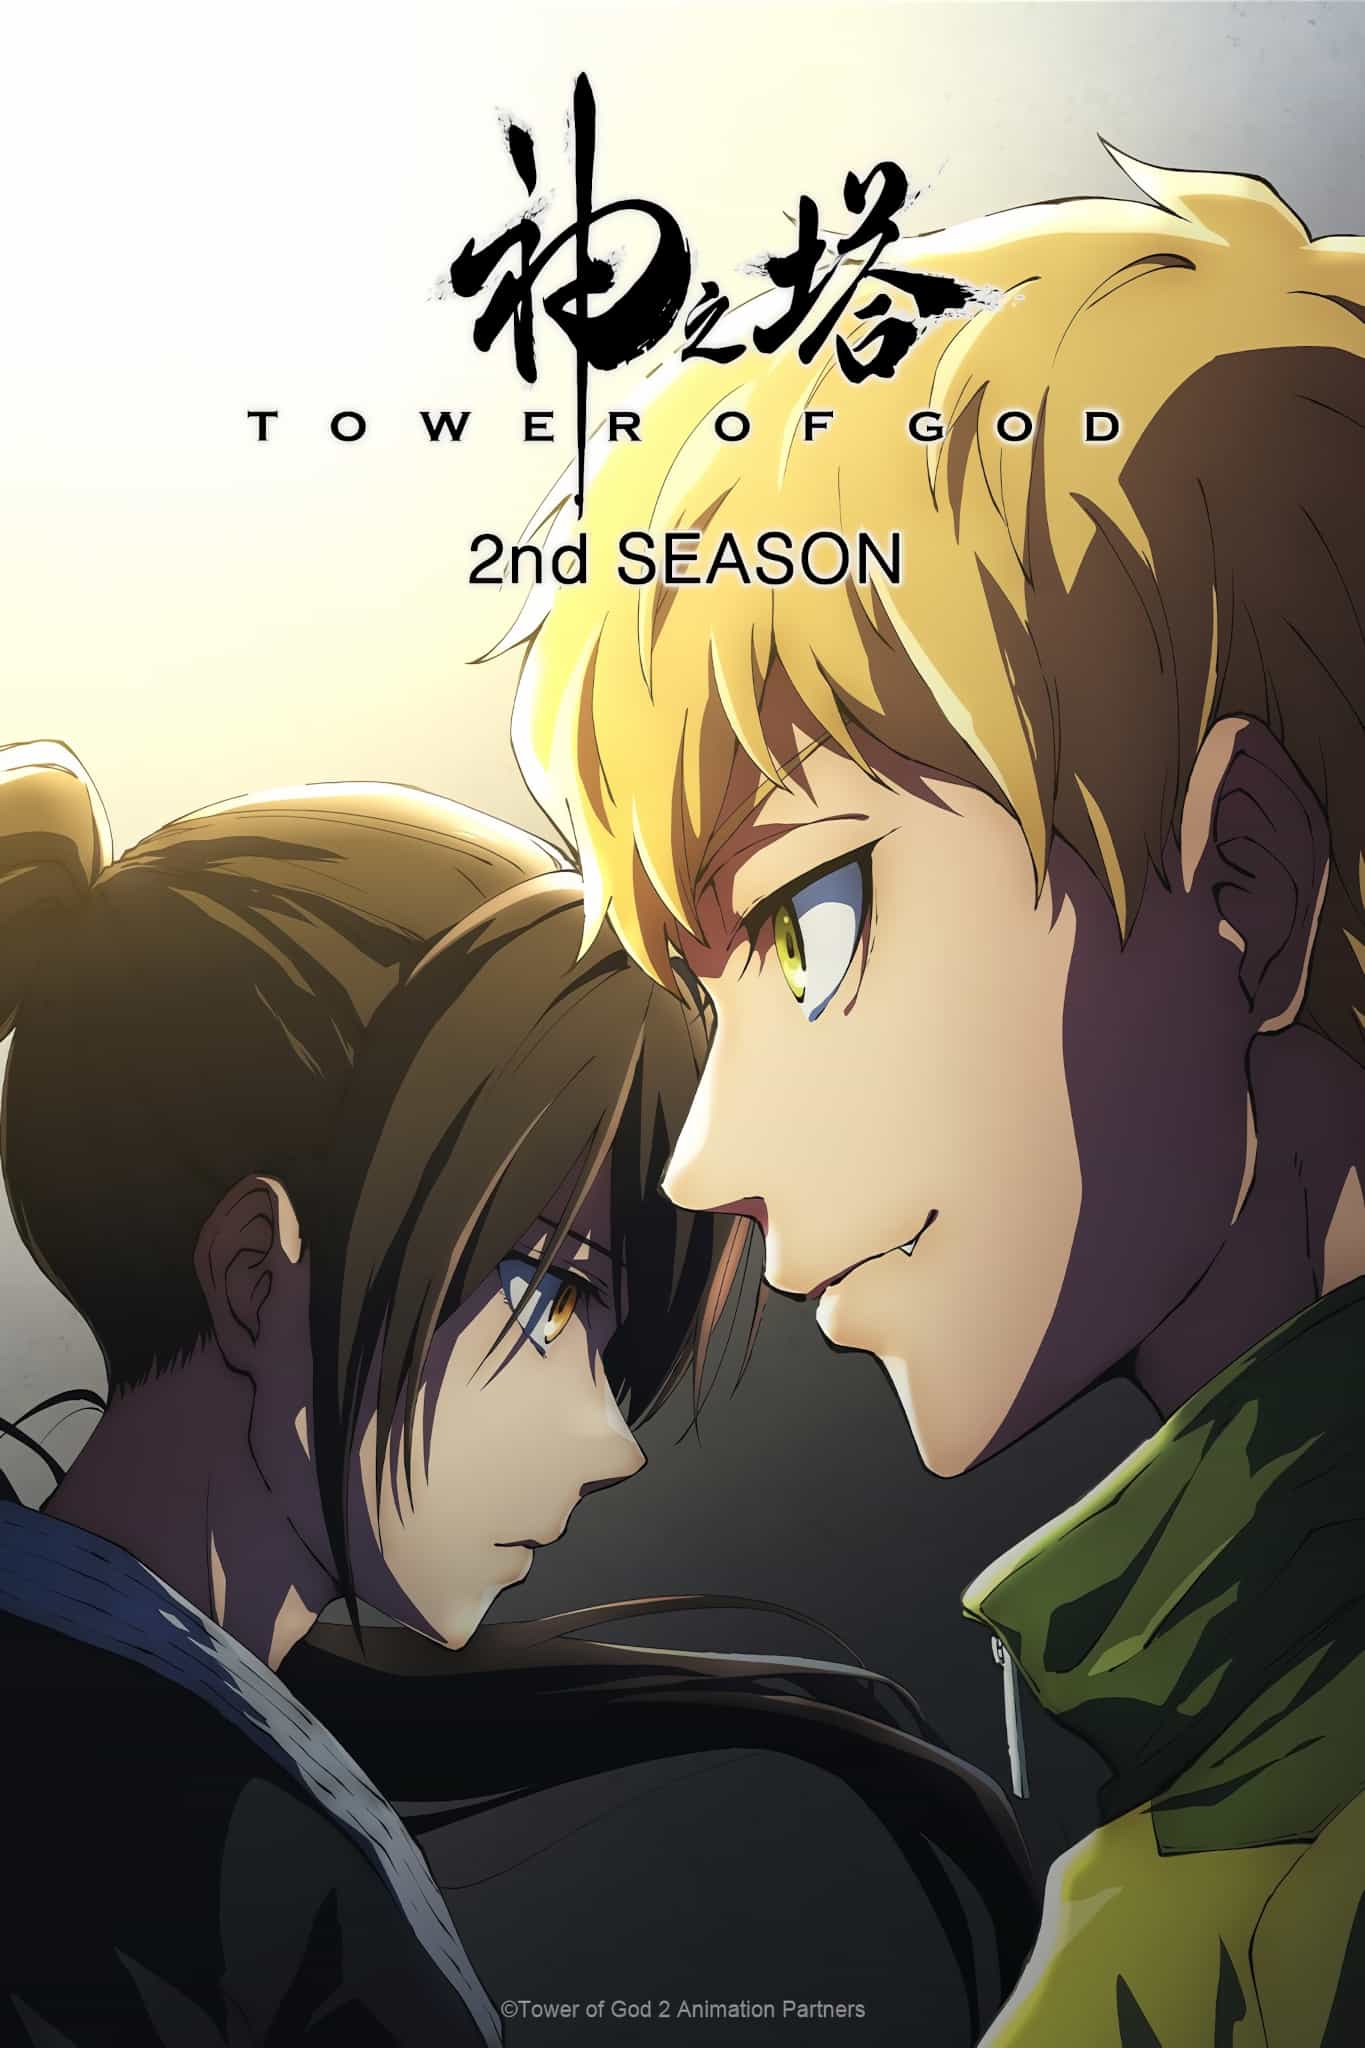 Kami no Tou - Tower of God - 2nd Season